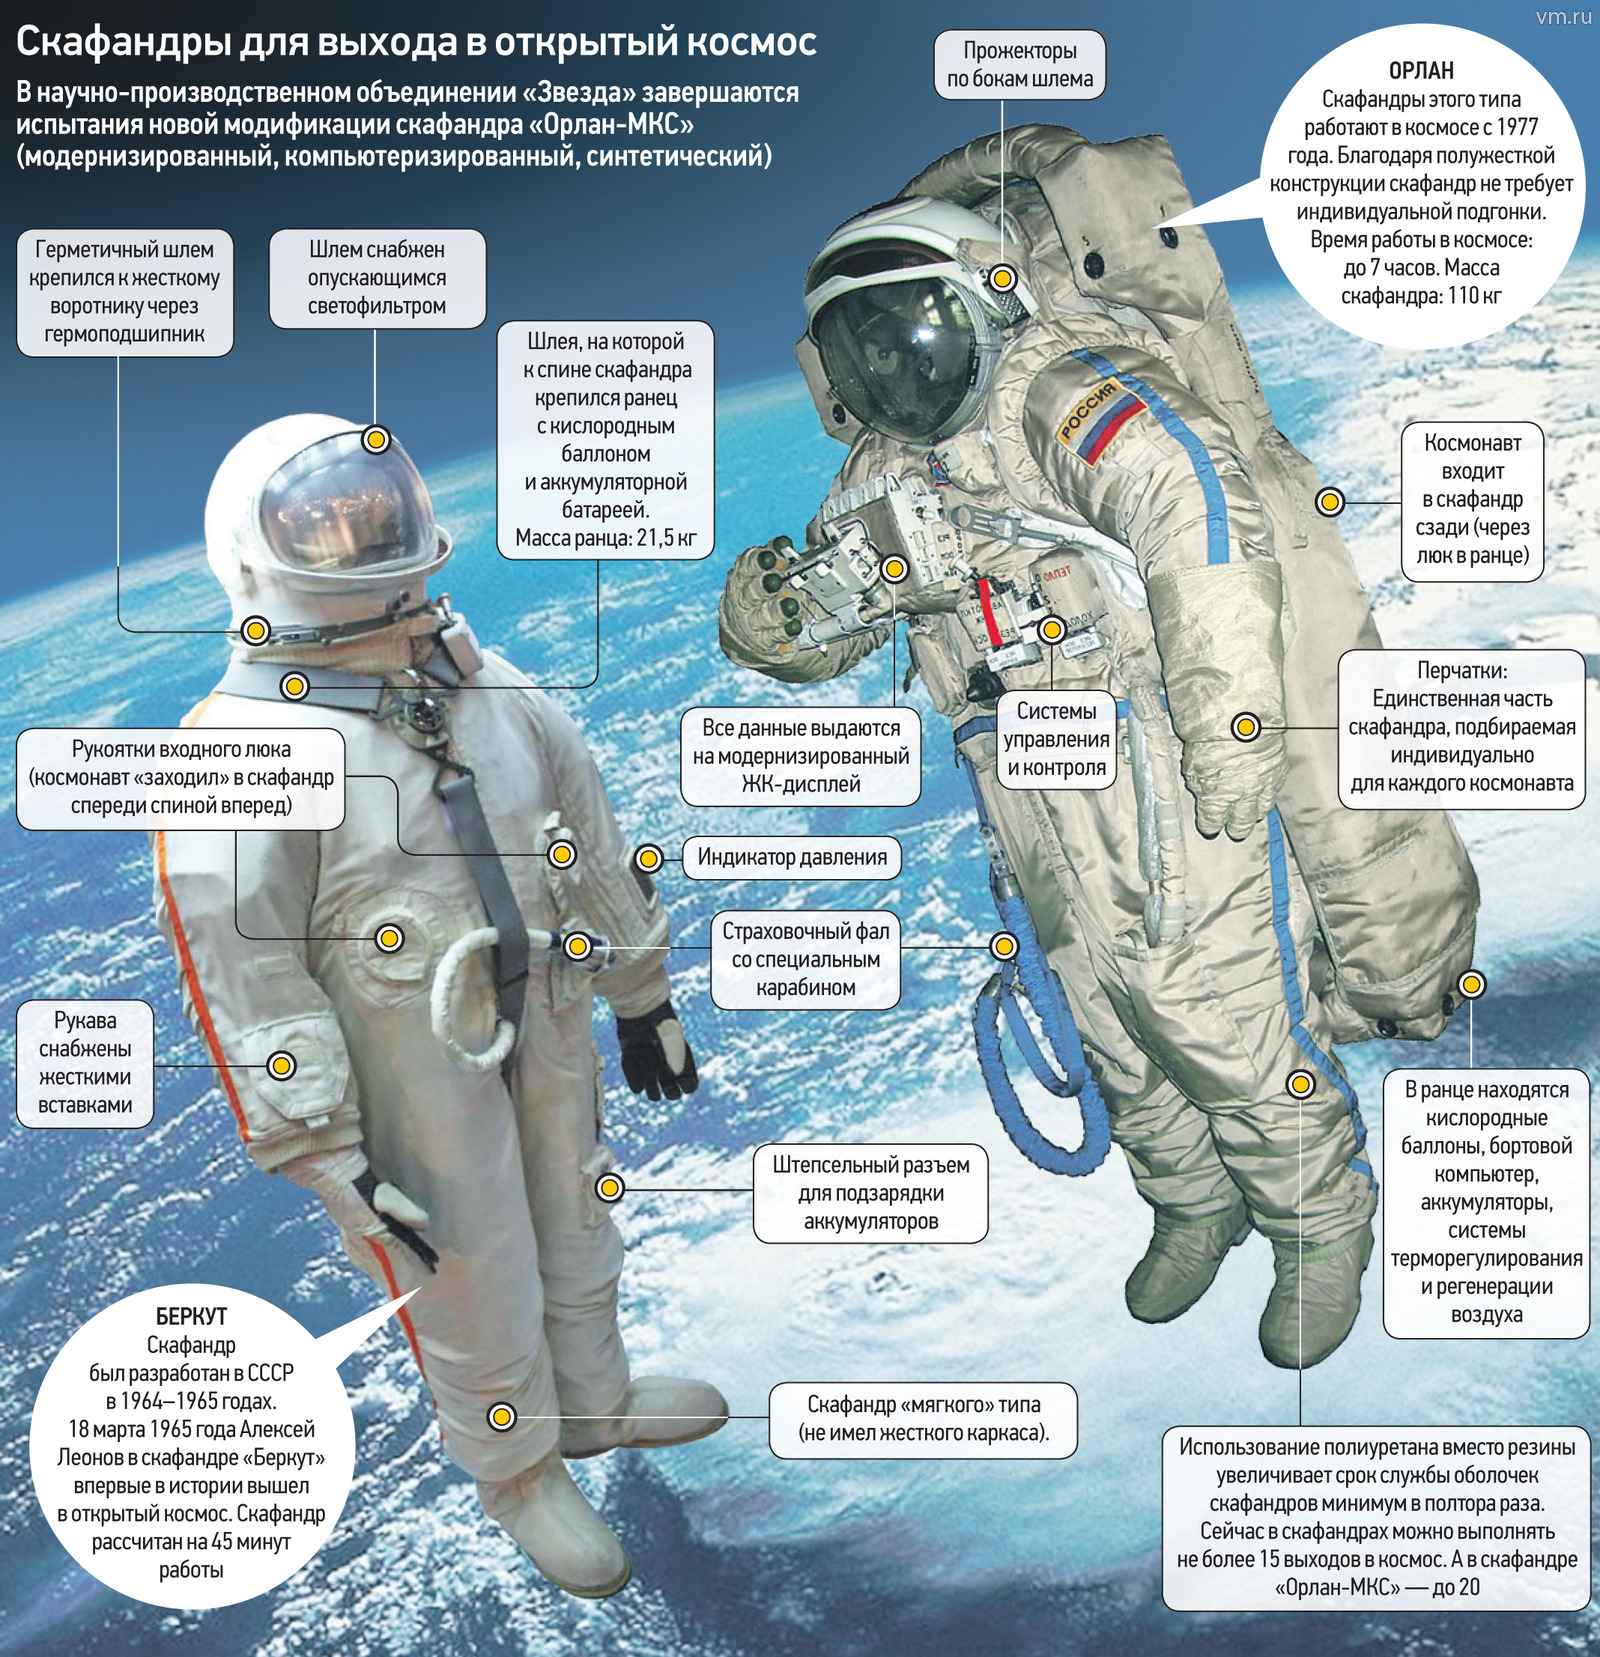 Скафандр космонавта весит. Орлан костюм Космонавта. Из чего состоит скафандр Космонавта.